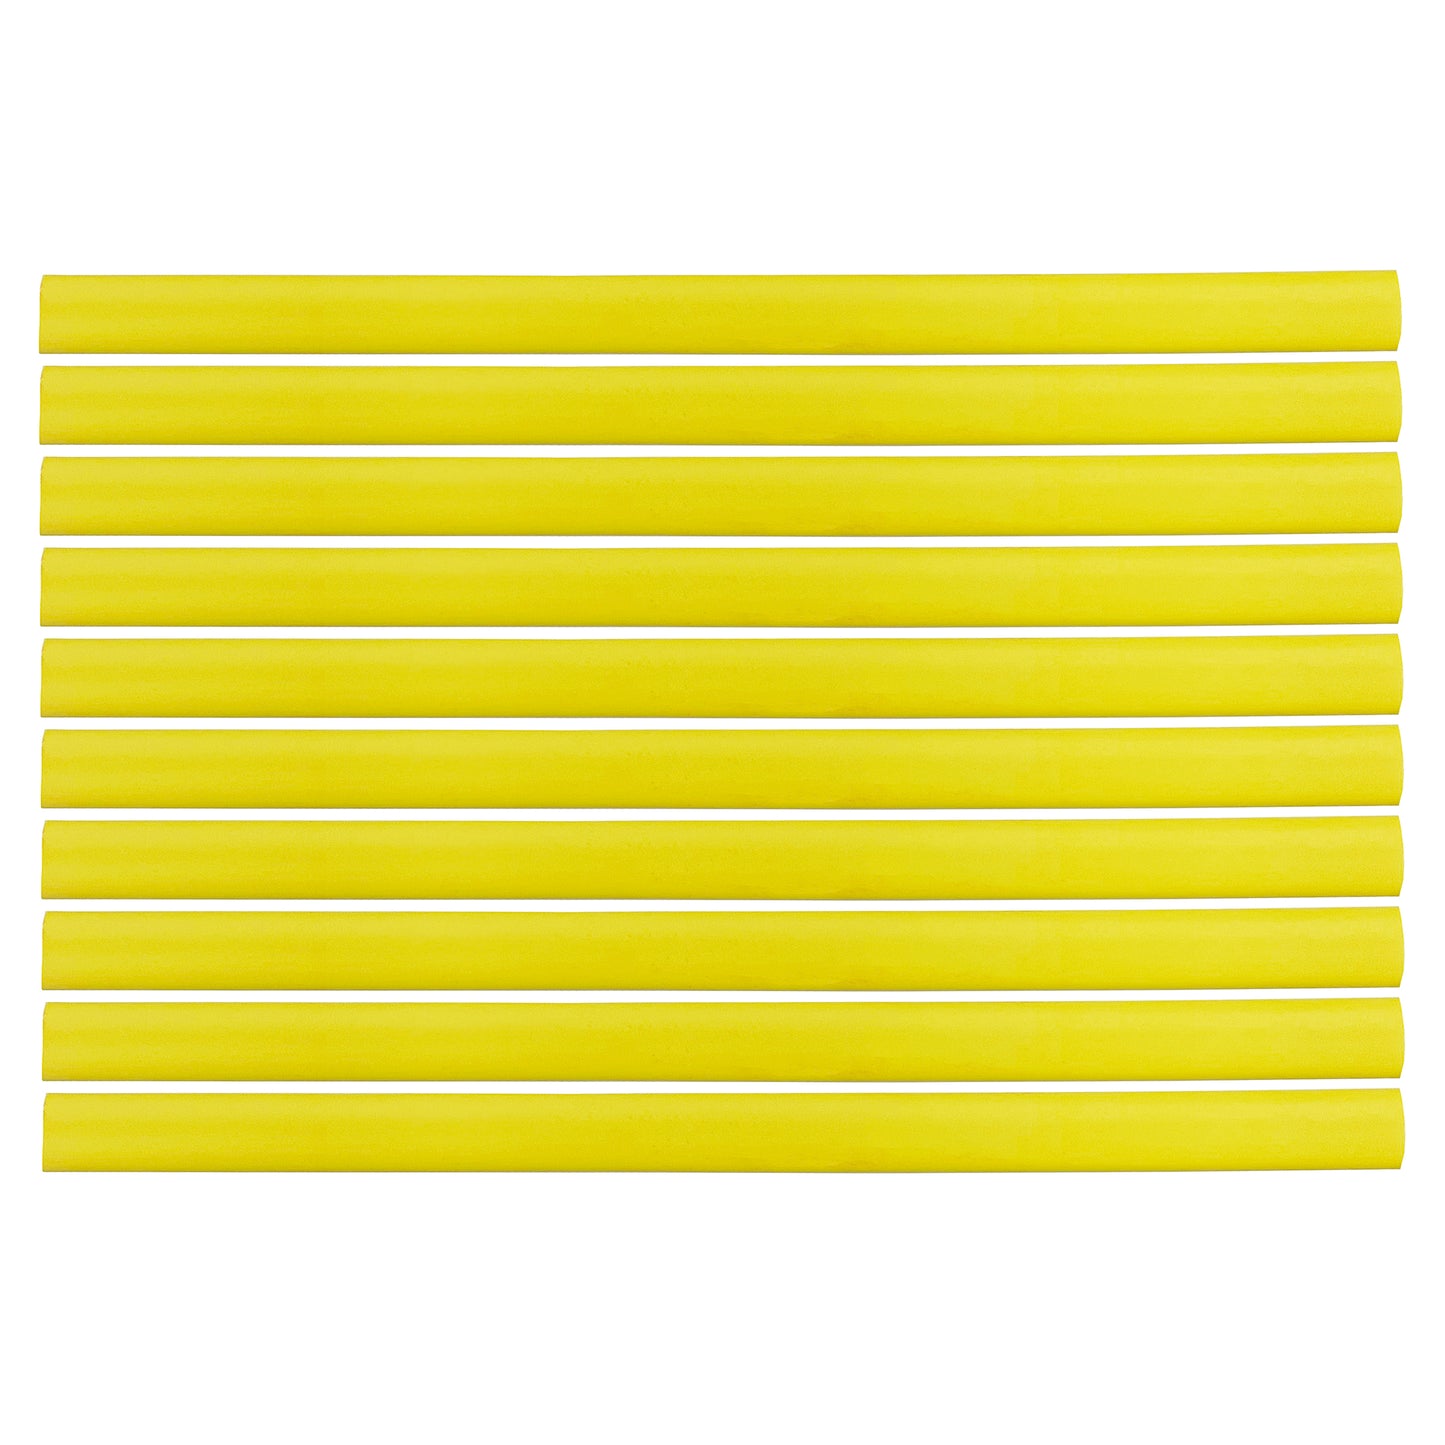 Flexible Thin Single Wall Non-Adhesive Heat Shrink Tubing 2:1 Yellow 1/2" ID - 12" Inch 10 Pack